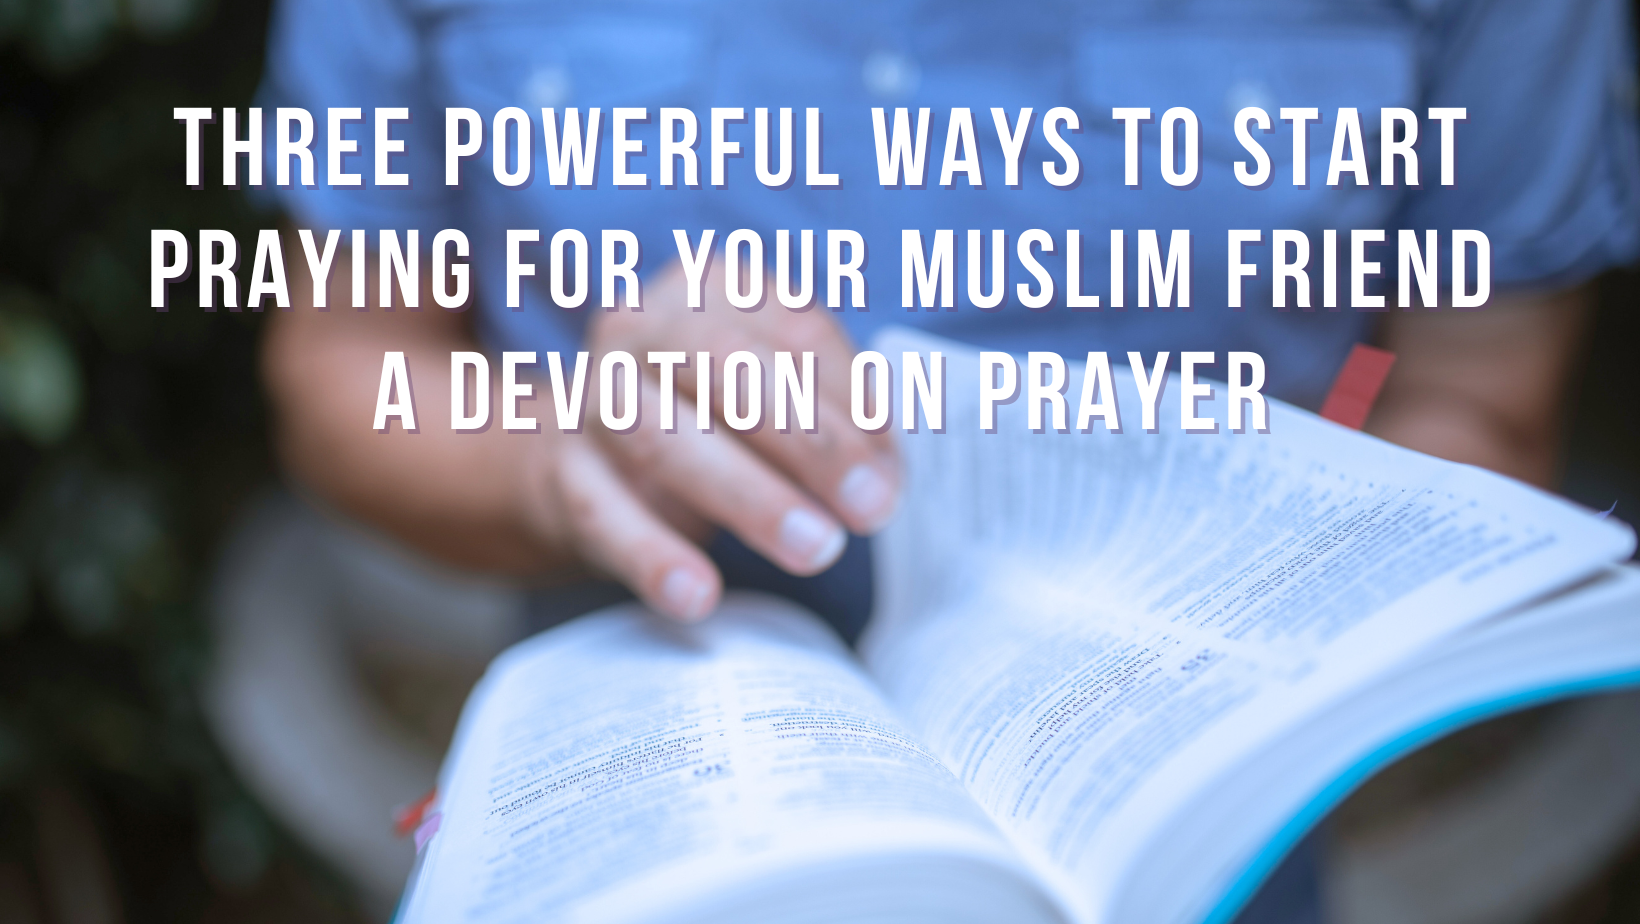 Three powerful ways to start praying for your Muslim friend: A devotion on prayer